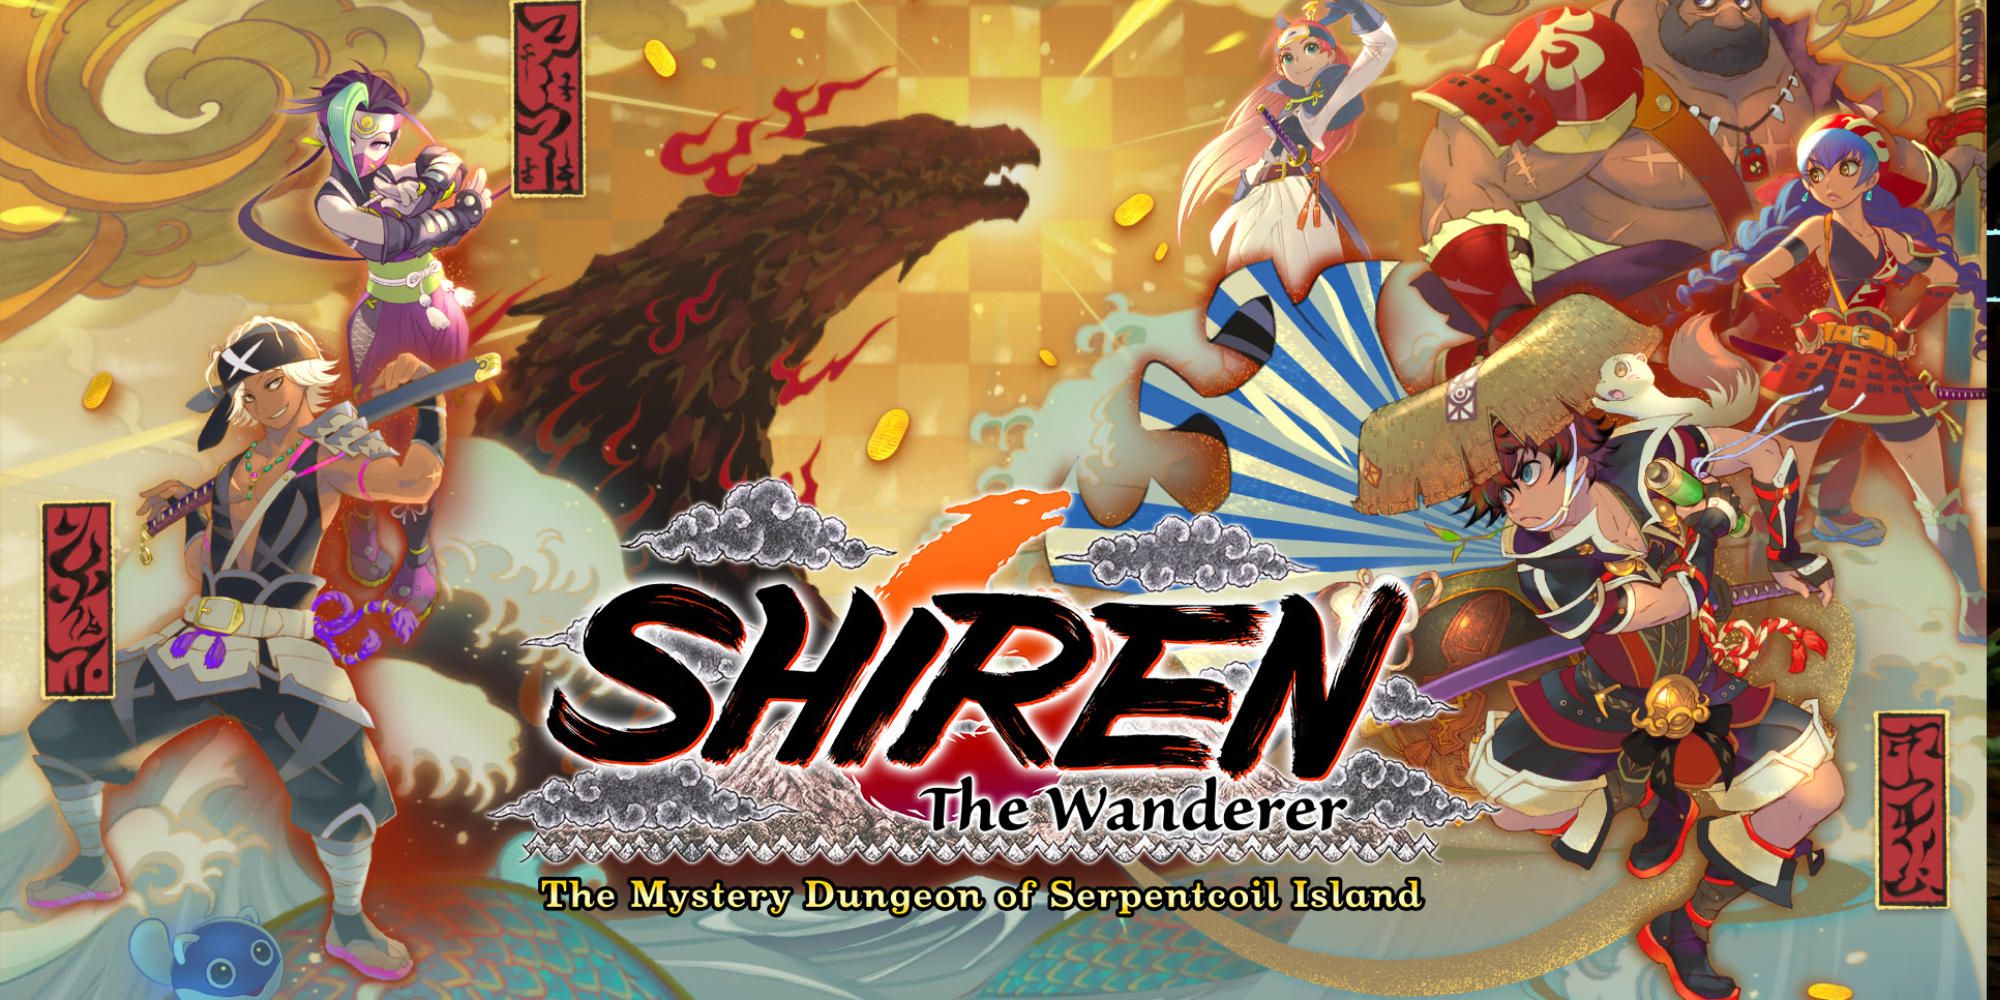 Free Content Update for Shiren the Wanderer Adds Sacred Tree Dungeons, Kokatsu Shiren